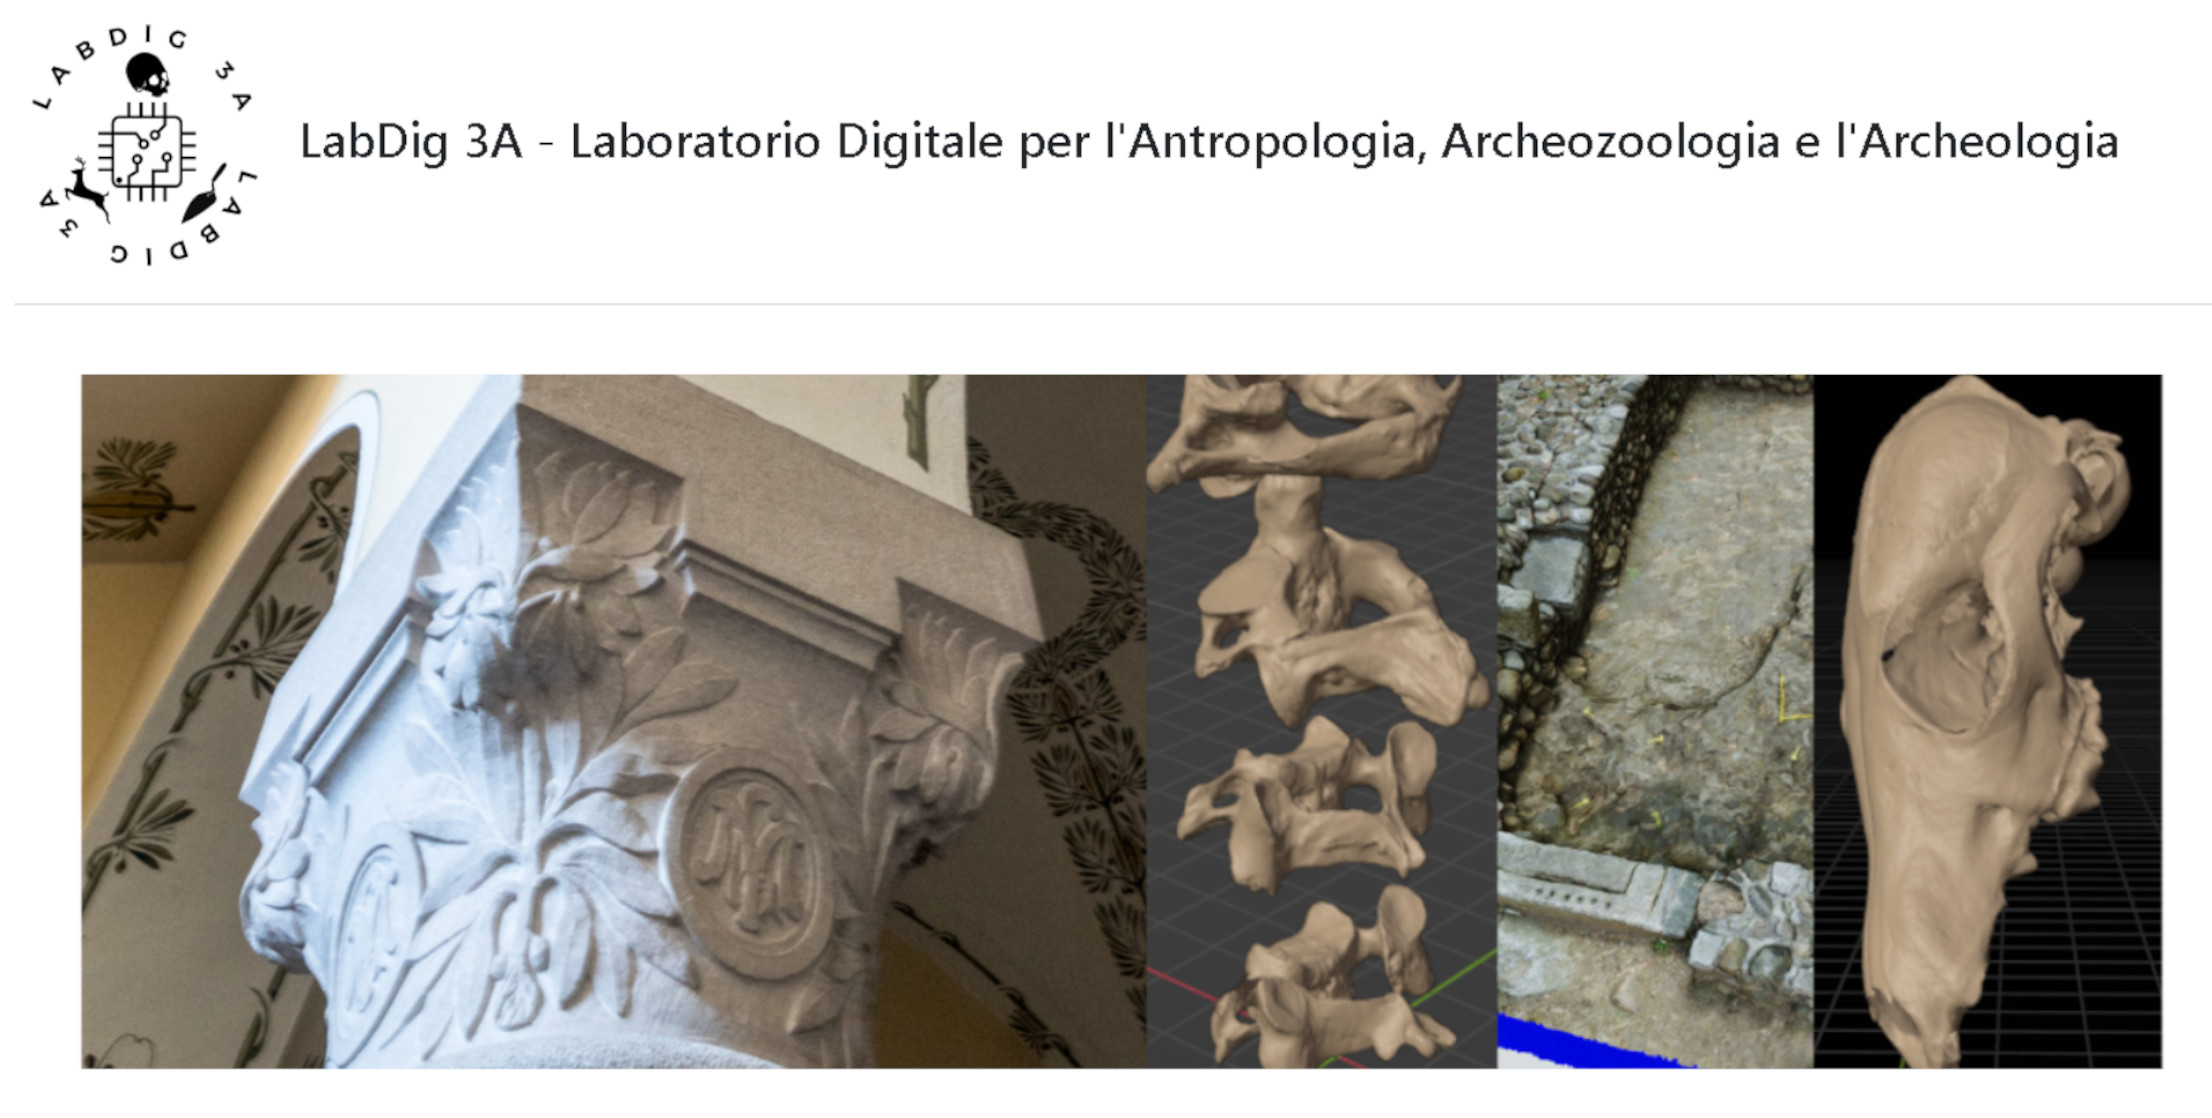 LabDig3A - Laboratorio Digitale per Antropologia, Acheozoologia e Archeologia